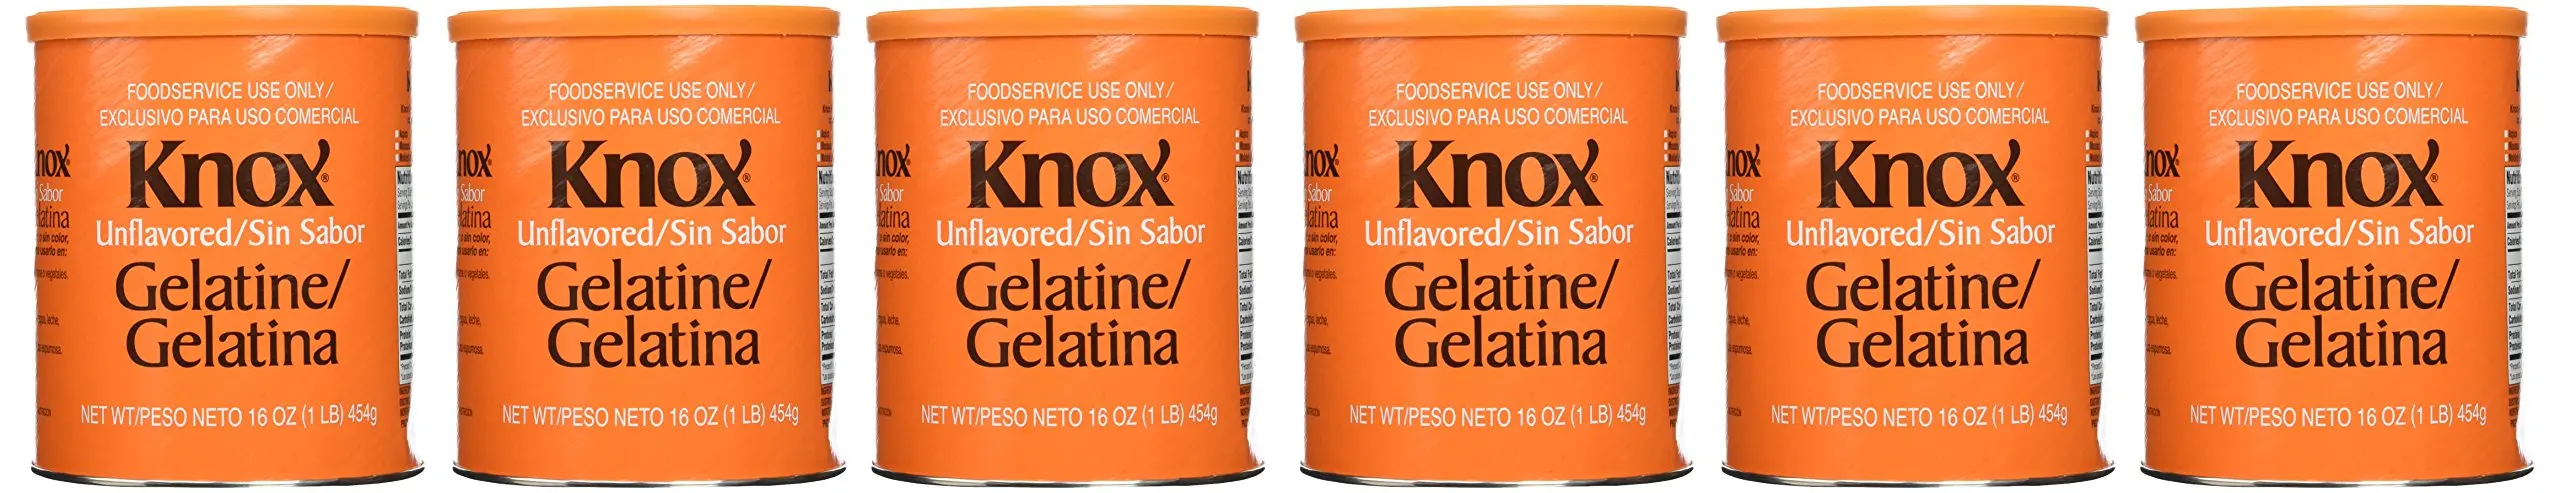 knox gelatin powder smaller box